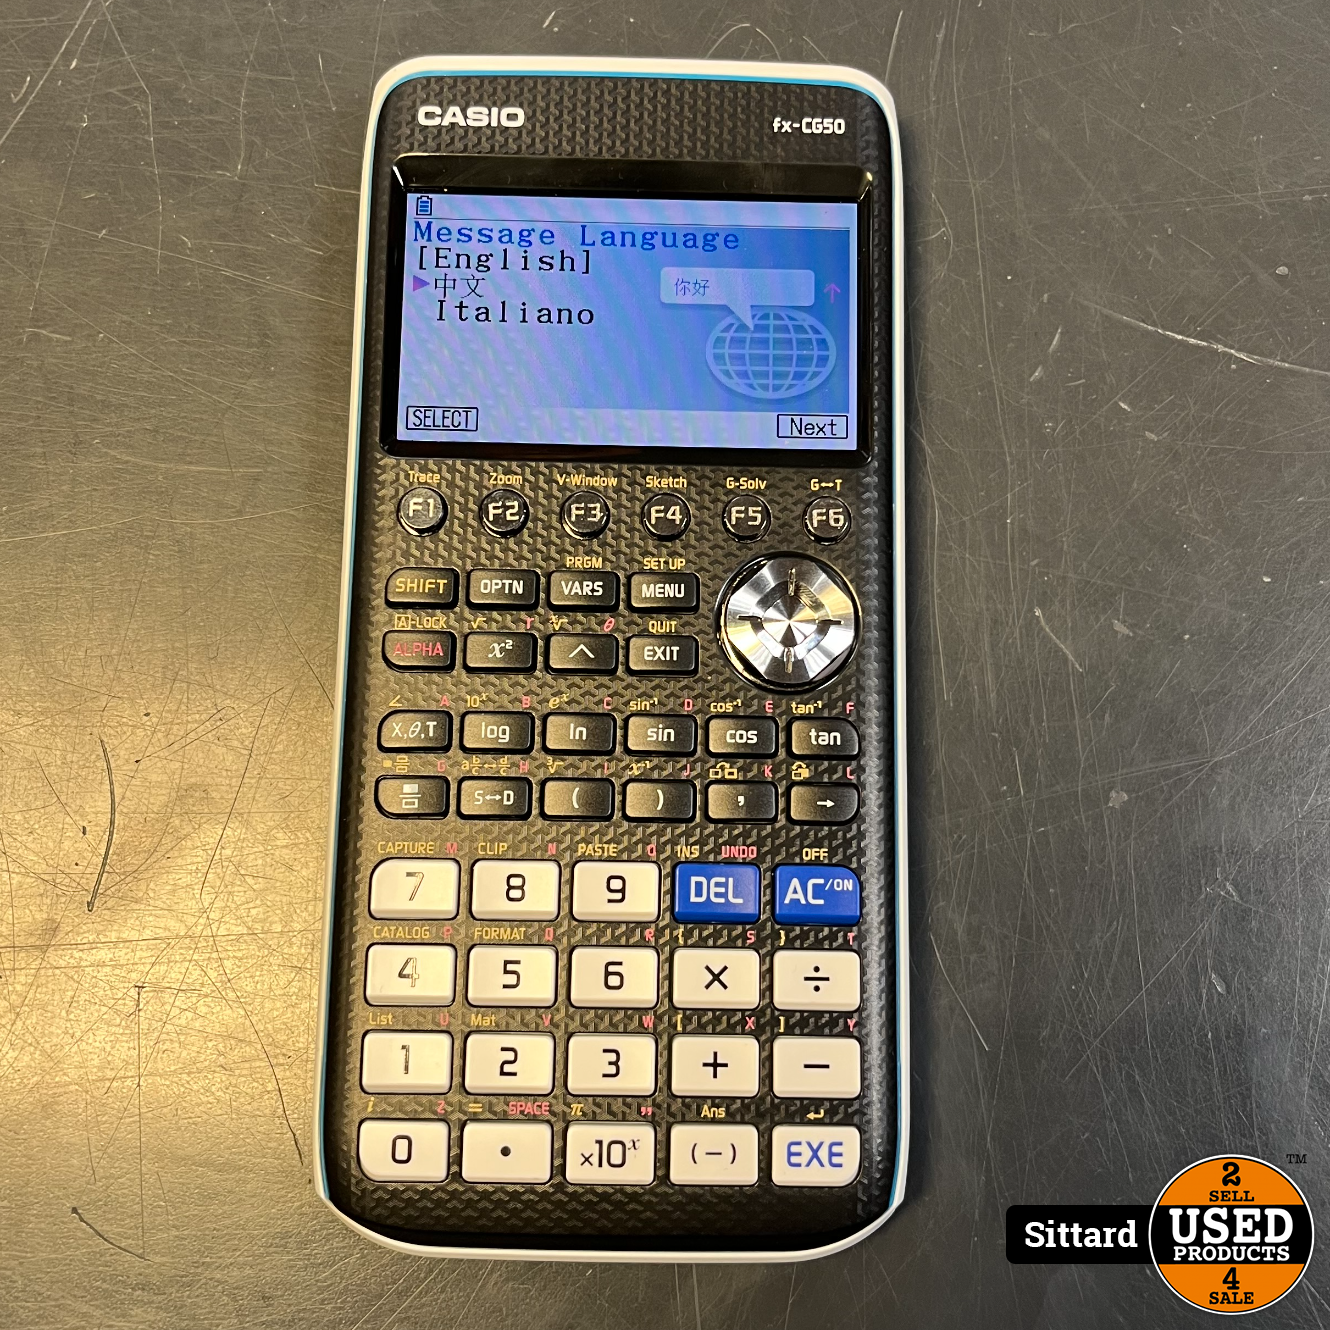 Doe voorzichtig Berucht Sport Casio FX-CG50 - Grafische rekenmachine, In nette staat | Nwpr 105,- Euro -  Used Products Sittard